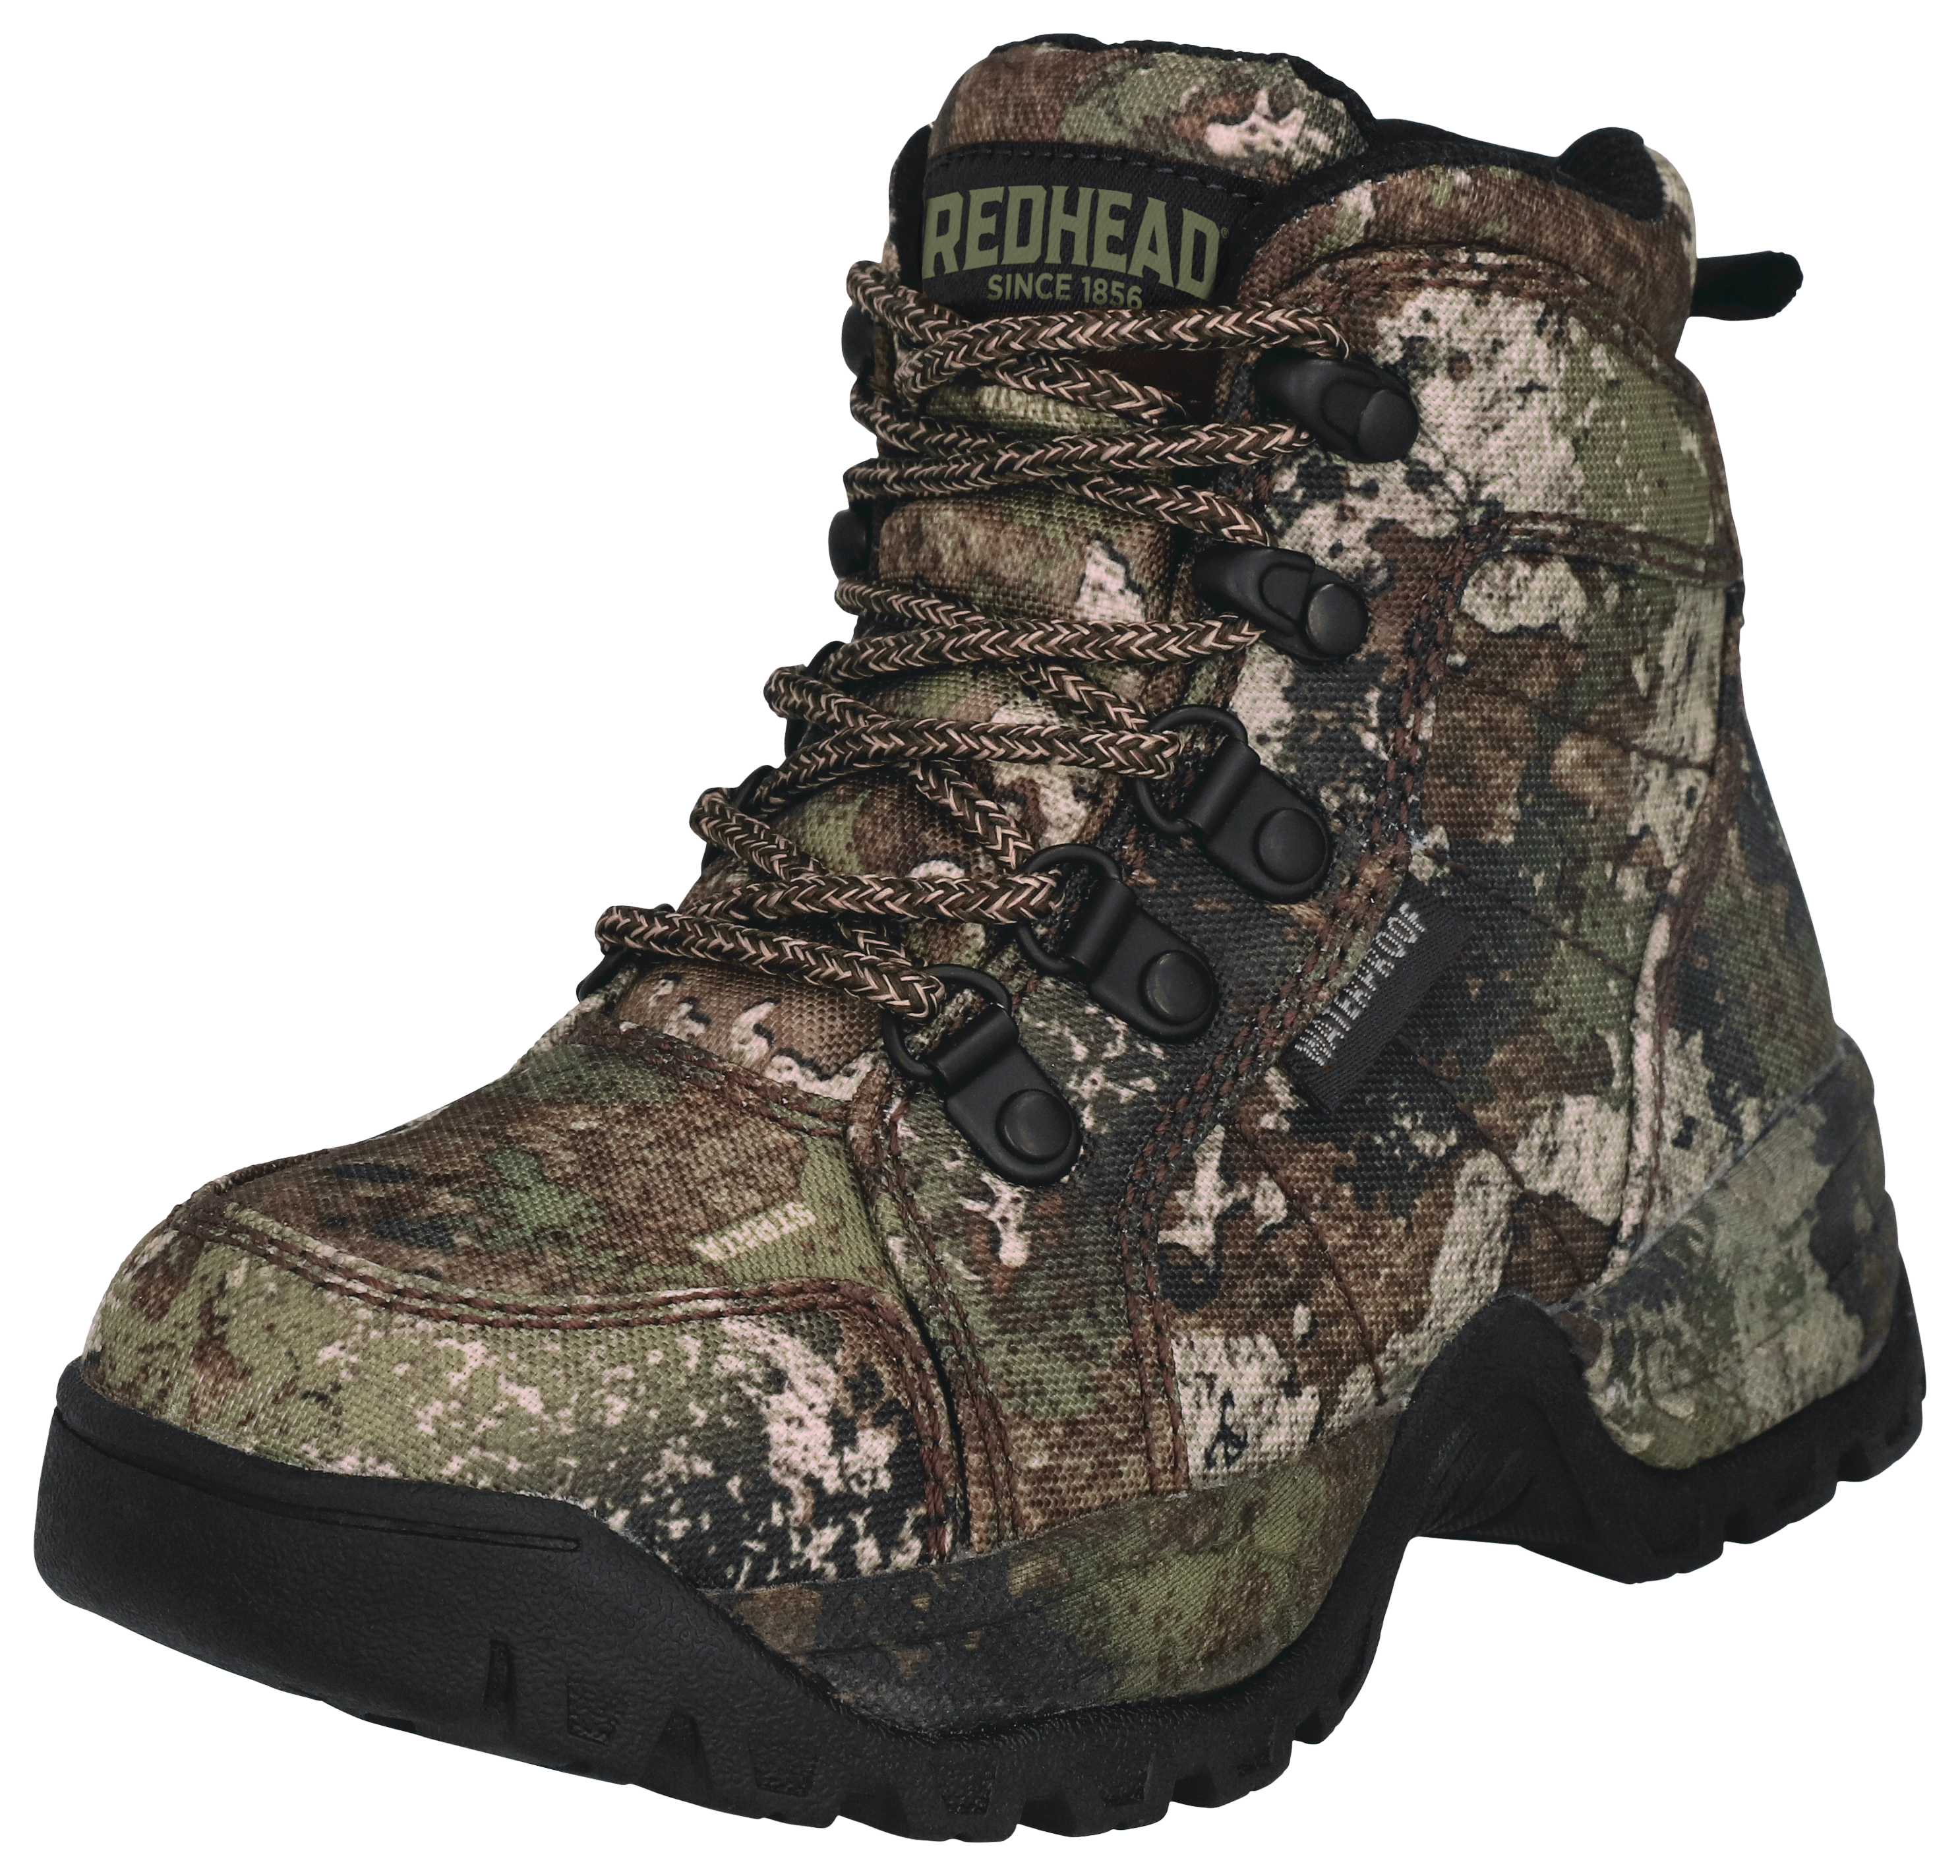 RedHead Timber Buck Waterproof Hunting Boots for Kids - TrueTimber Strata - 2 Kids